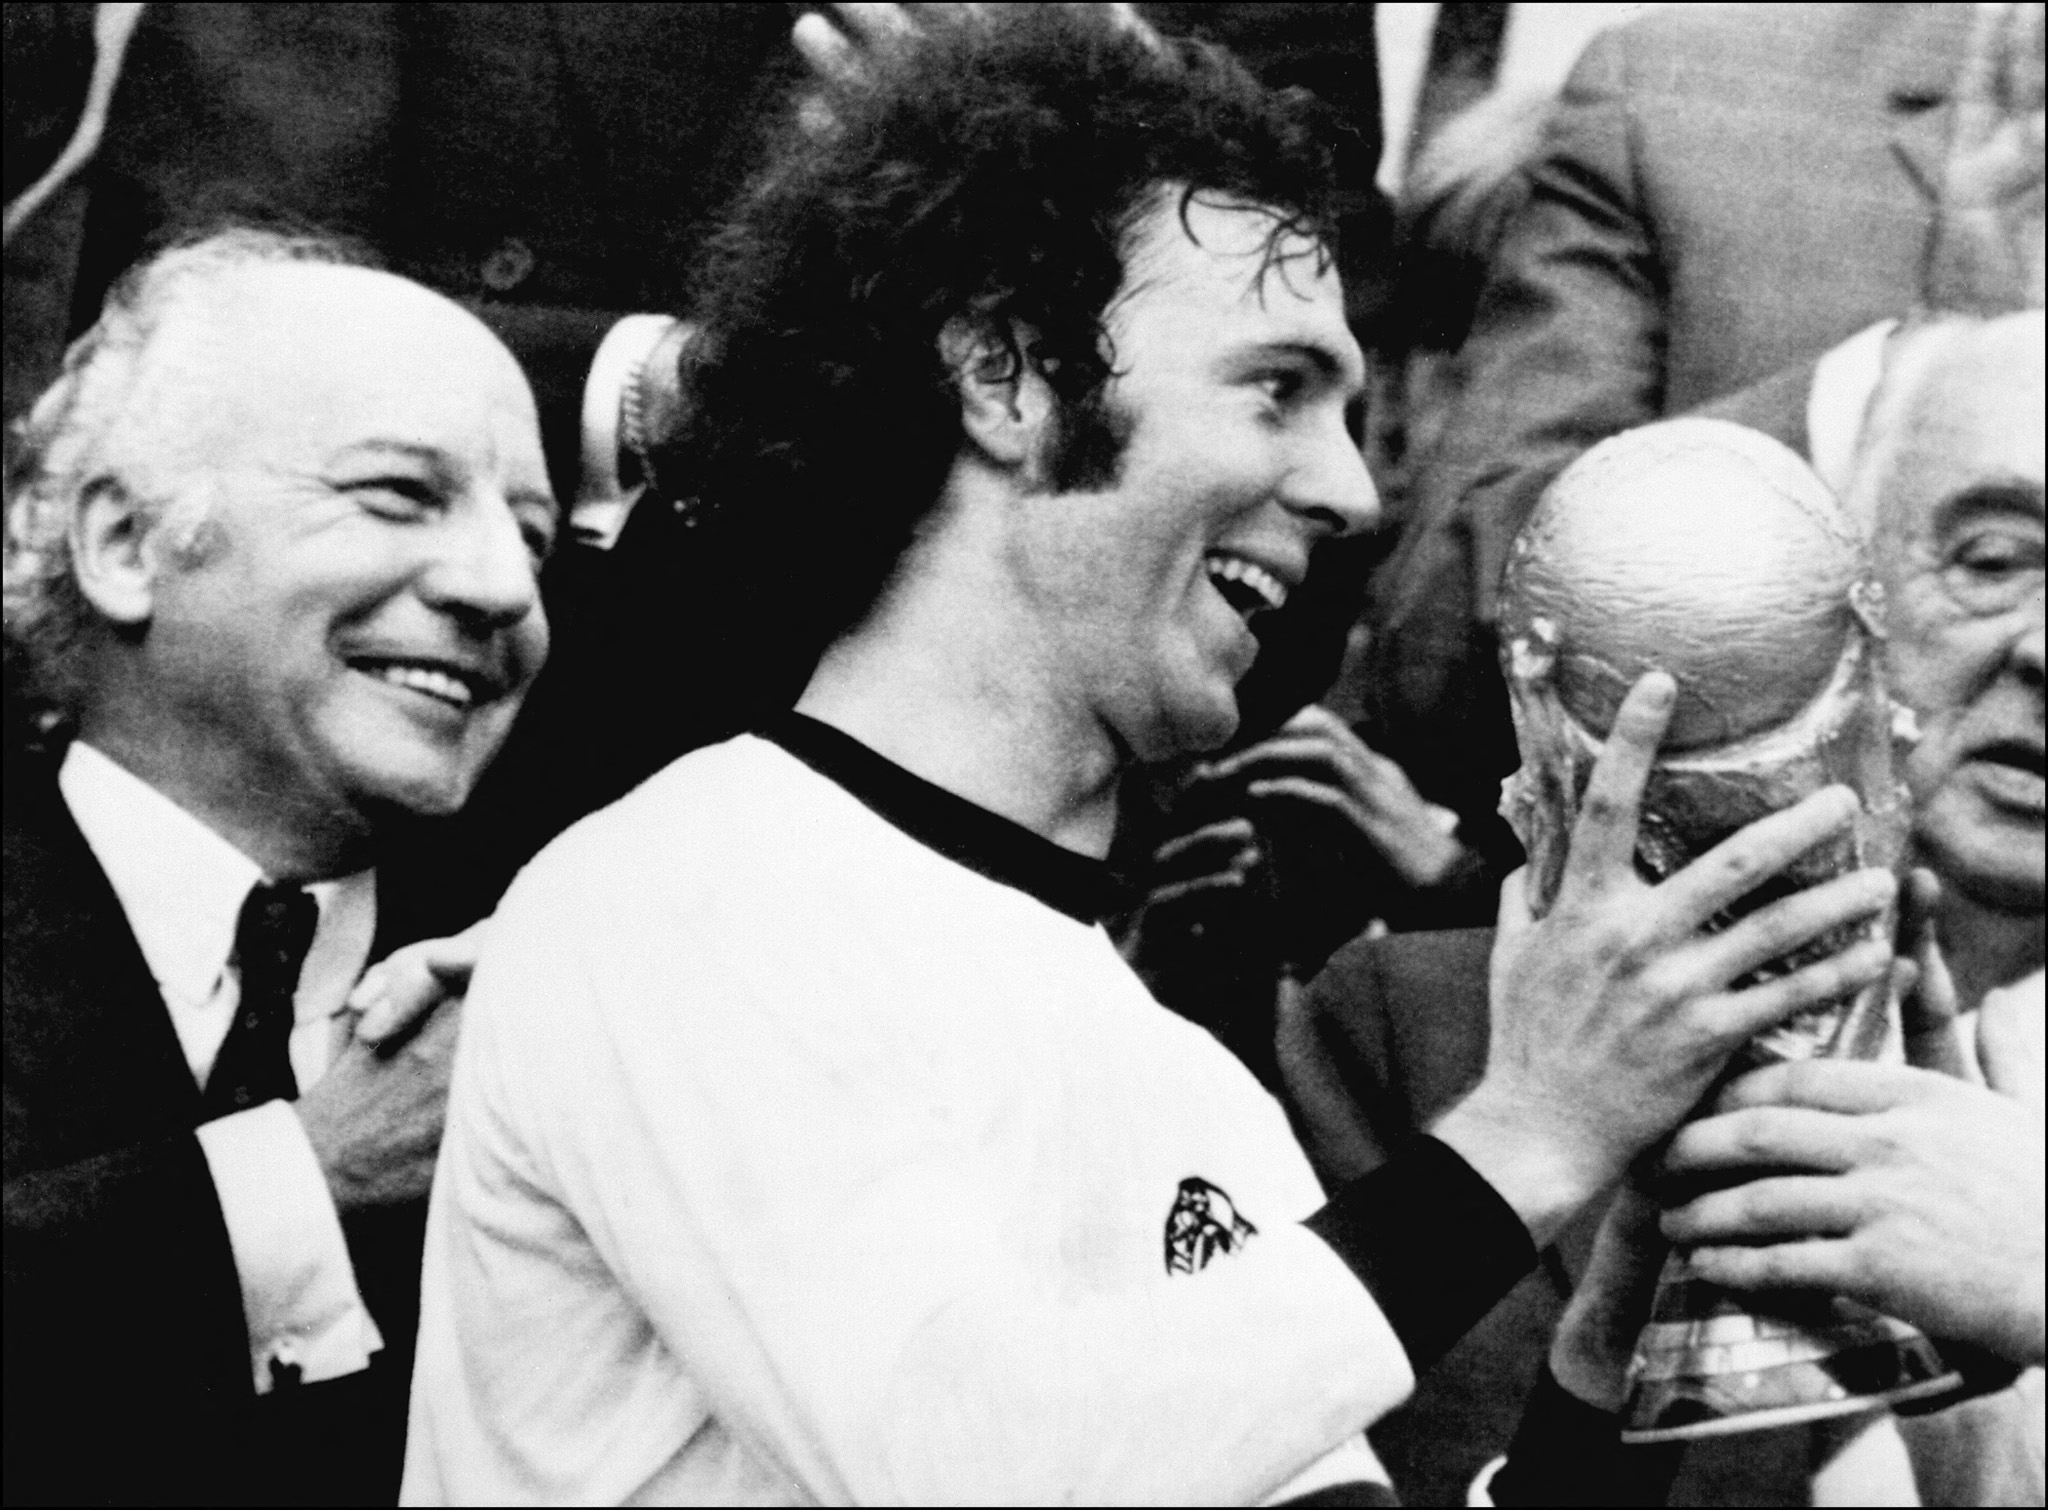 Franz Beckenbauer, 1974